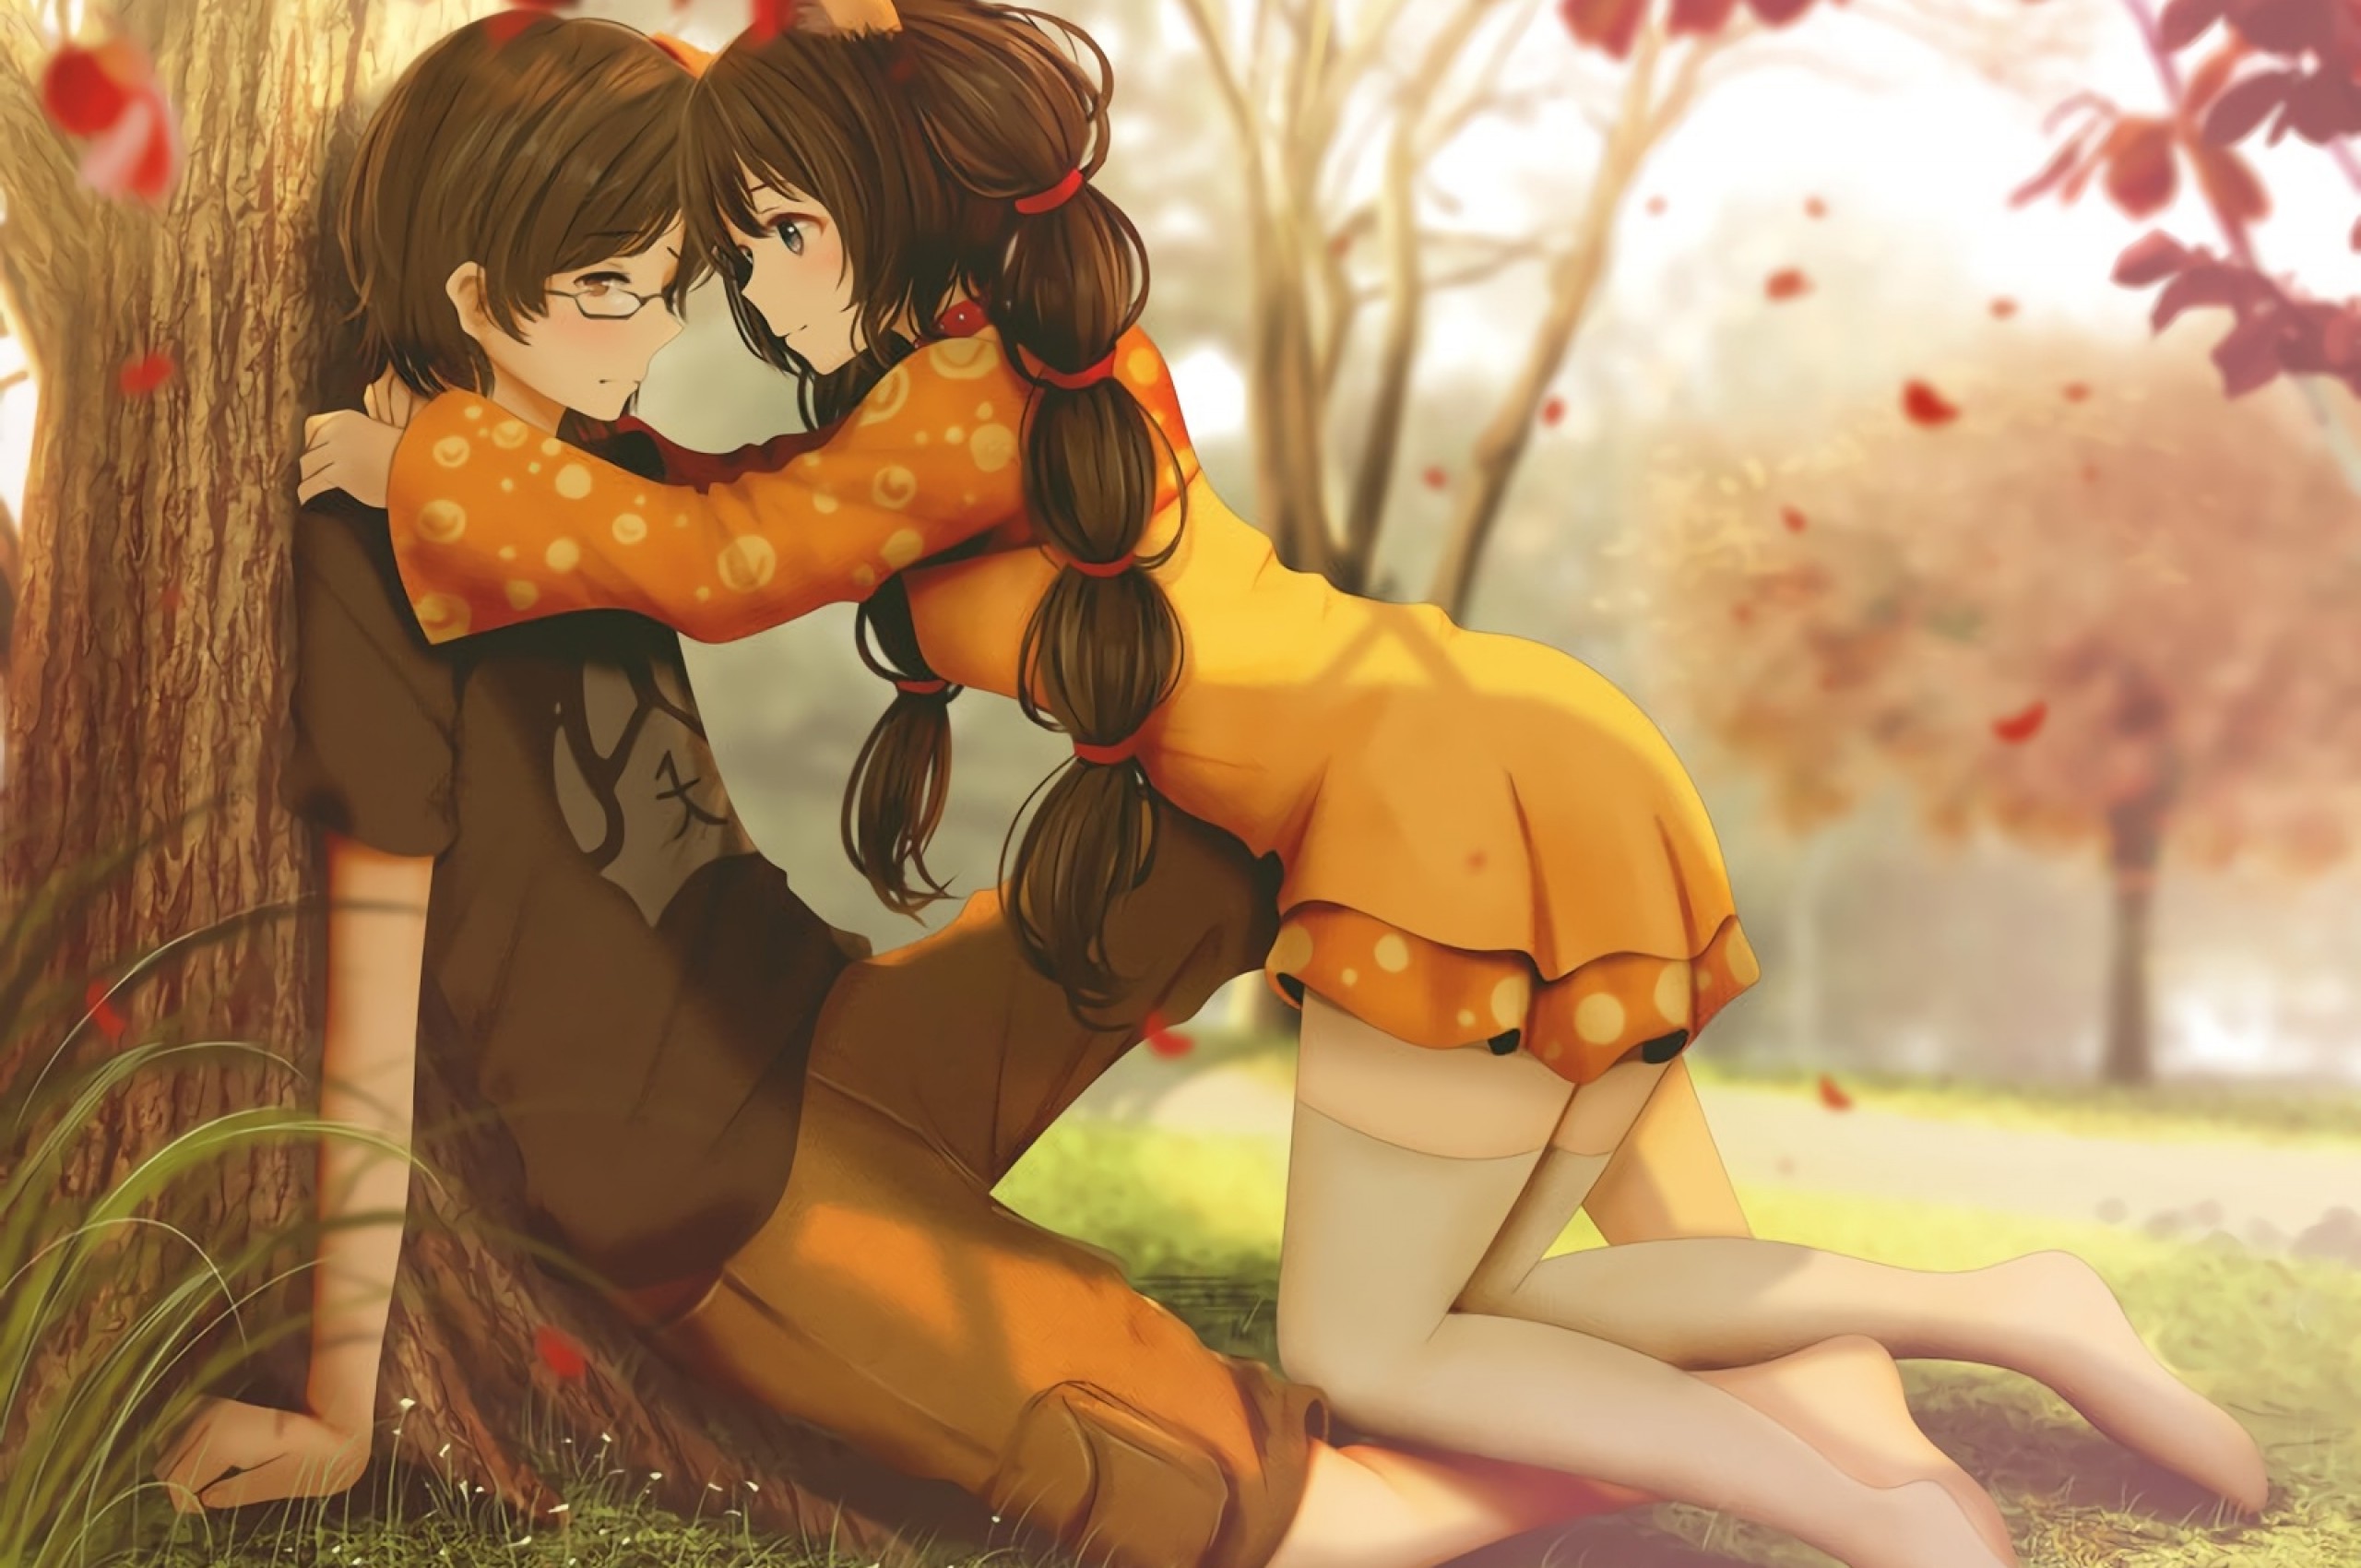 Anime Romance in the park - Autumn season